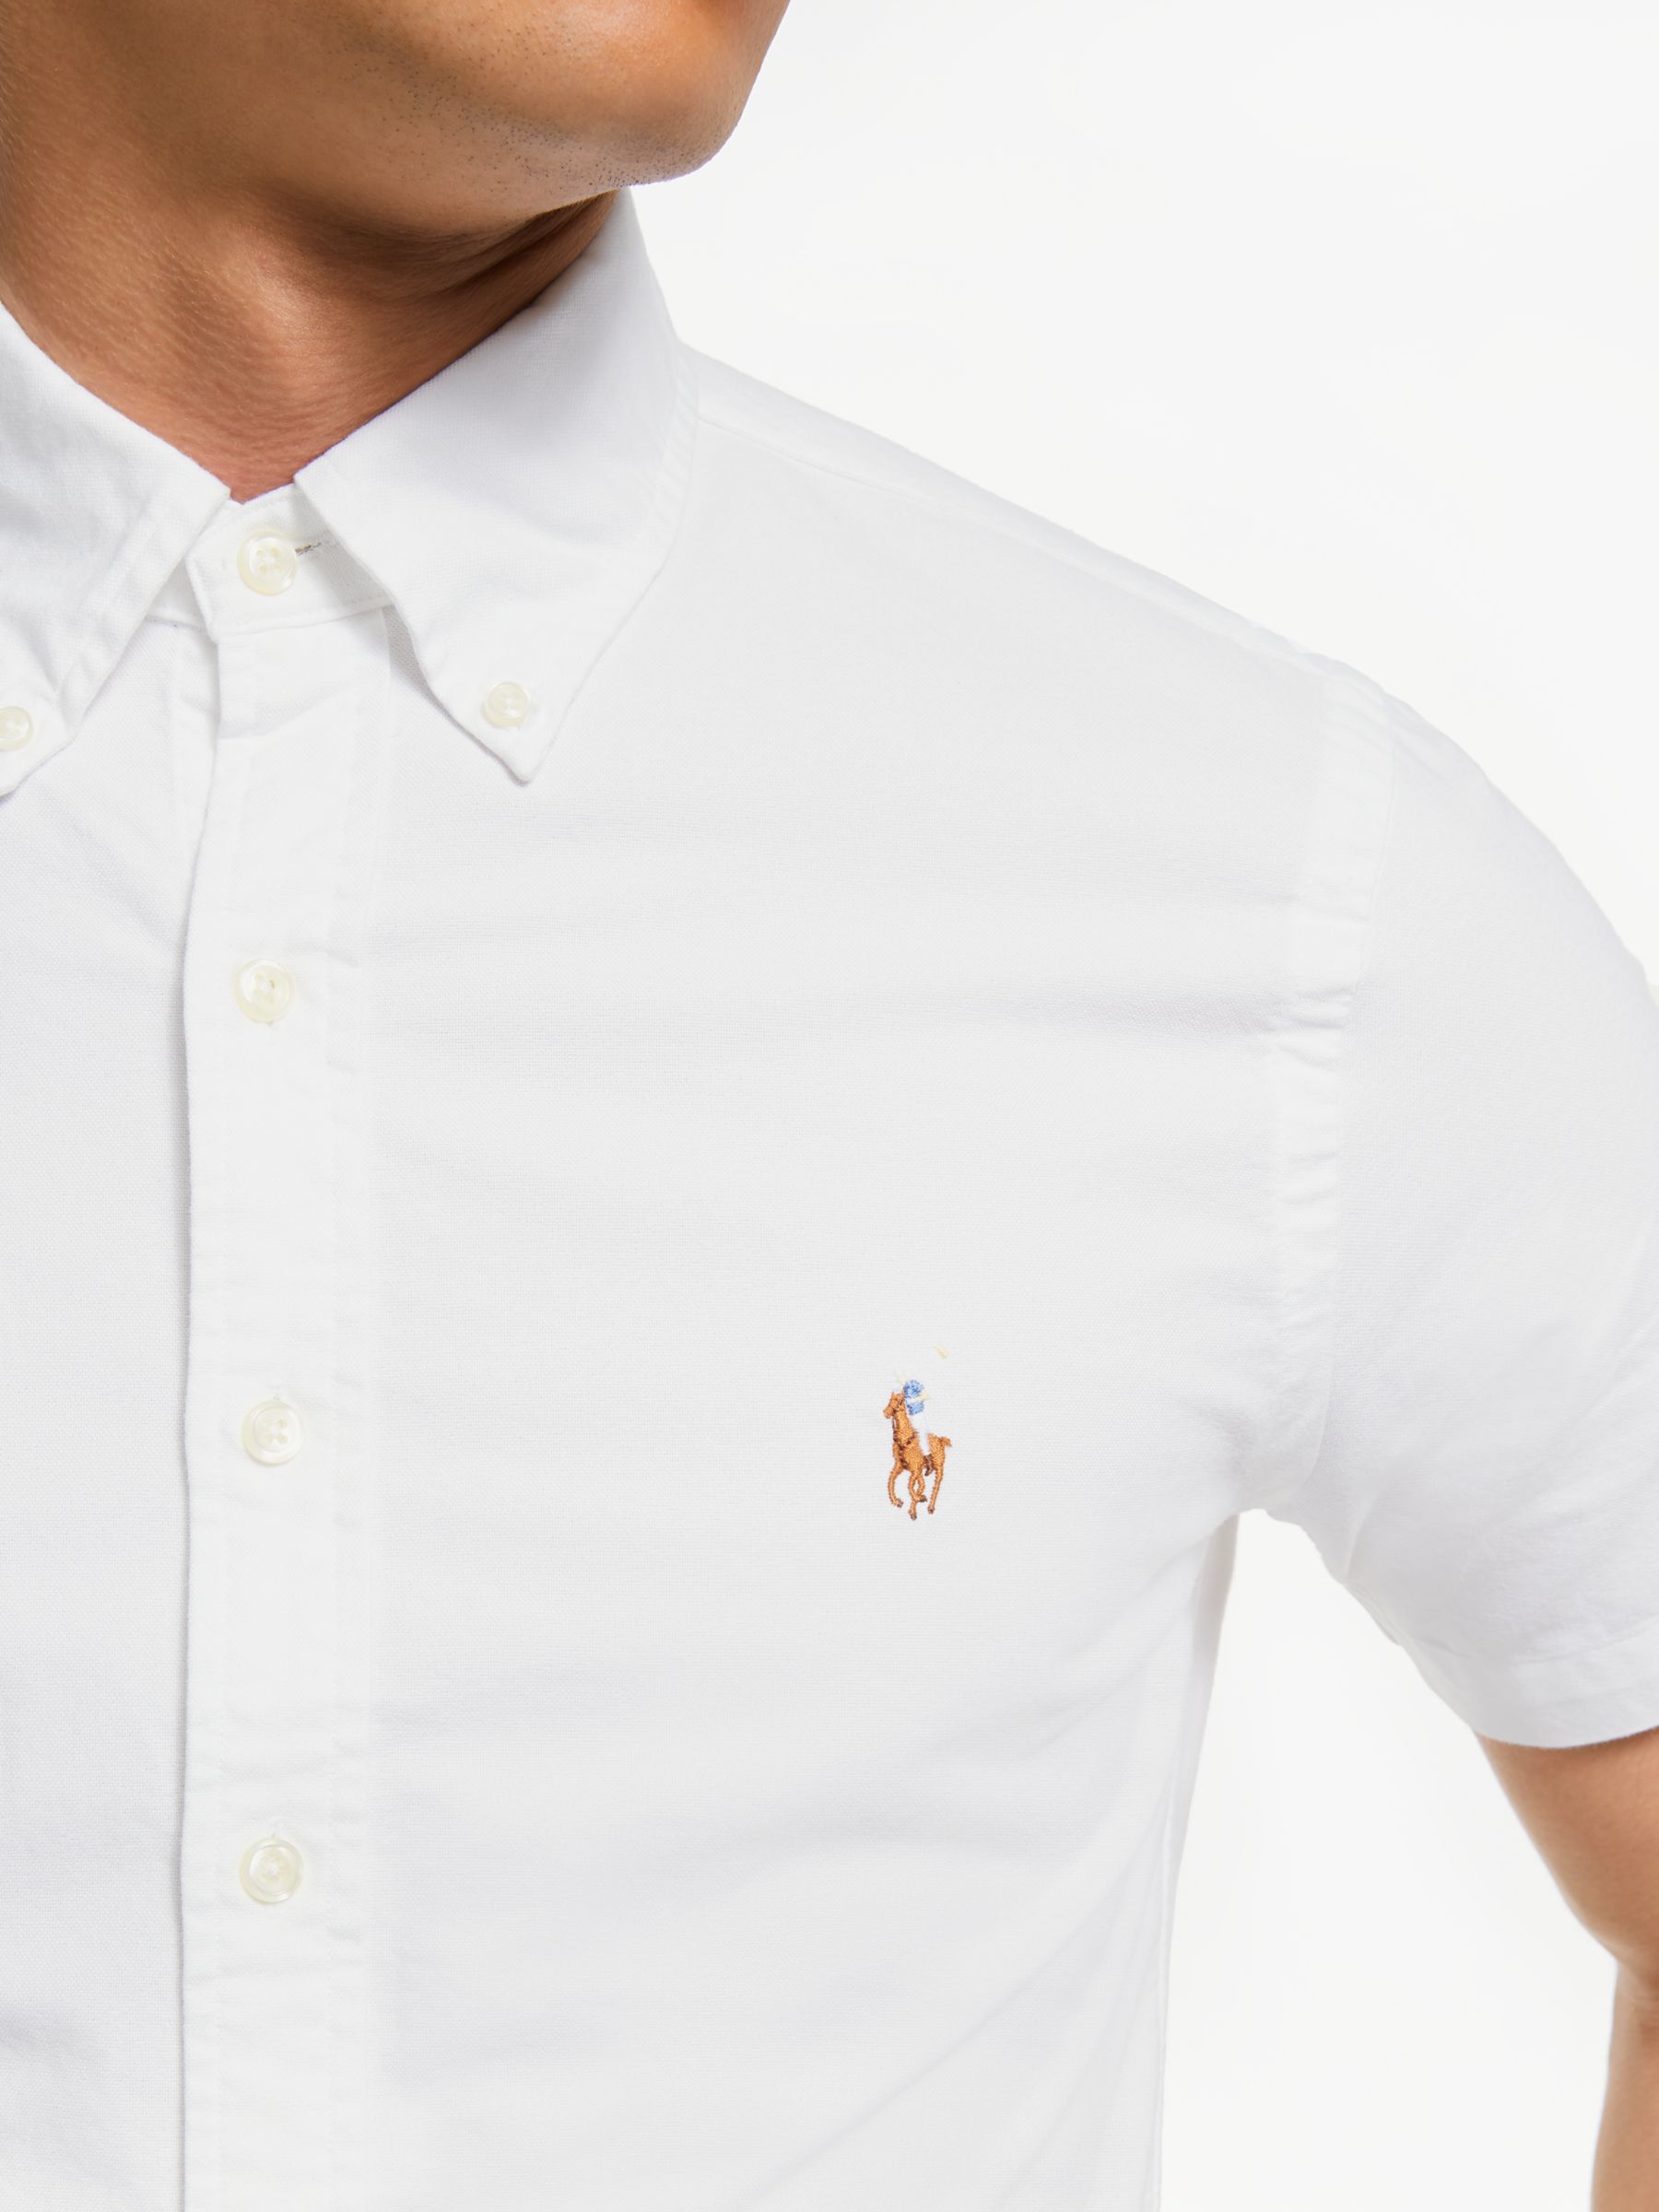 mens white short sleeve ralph lauren shirt